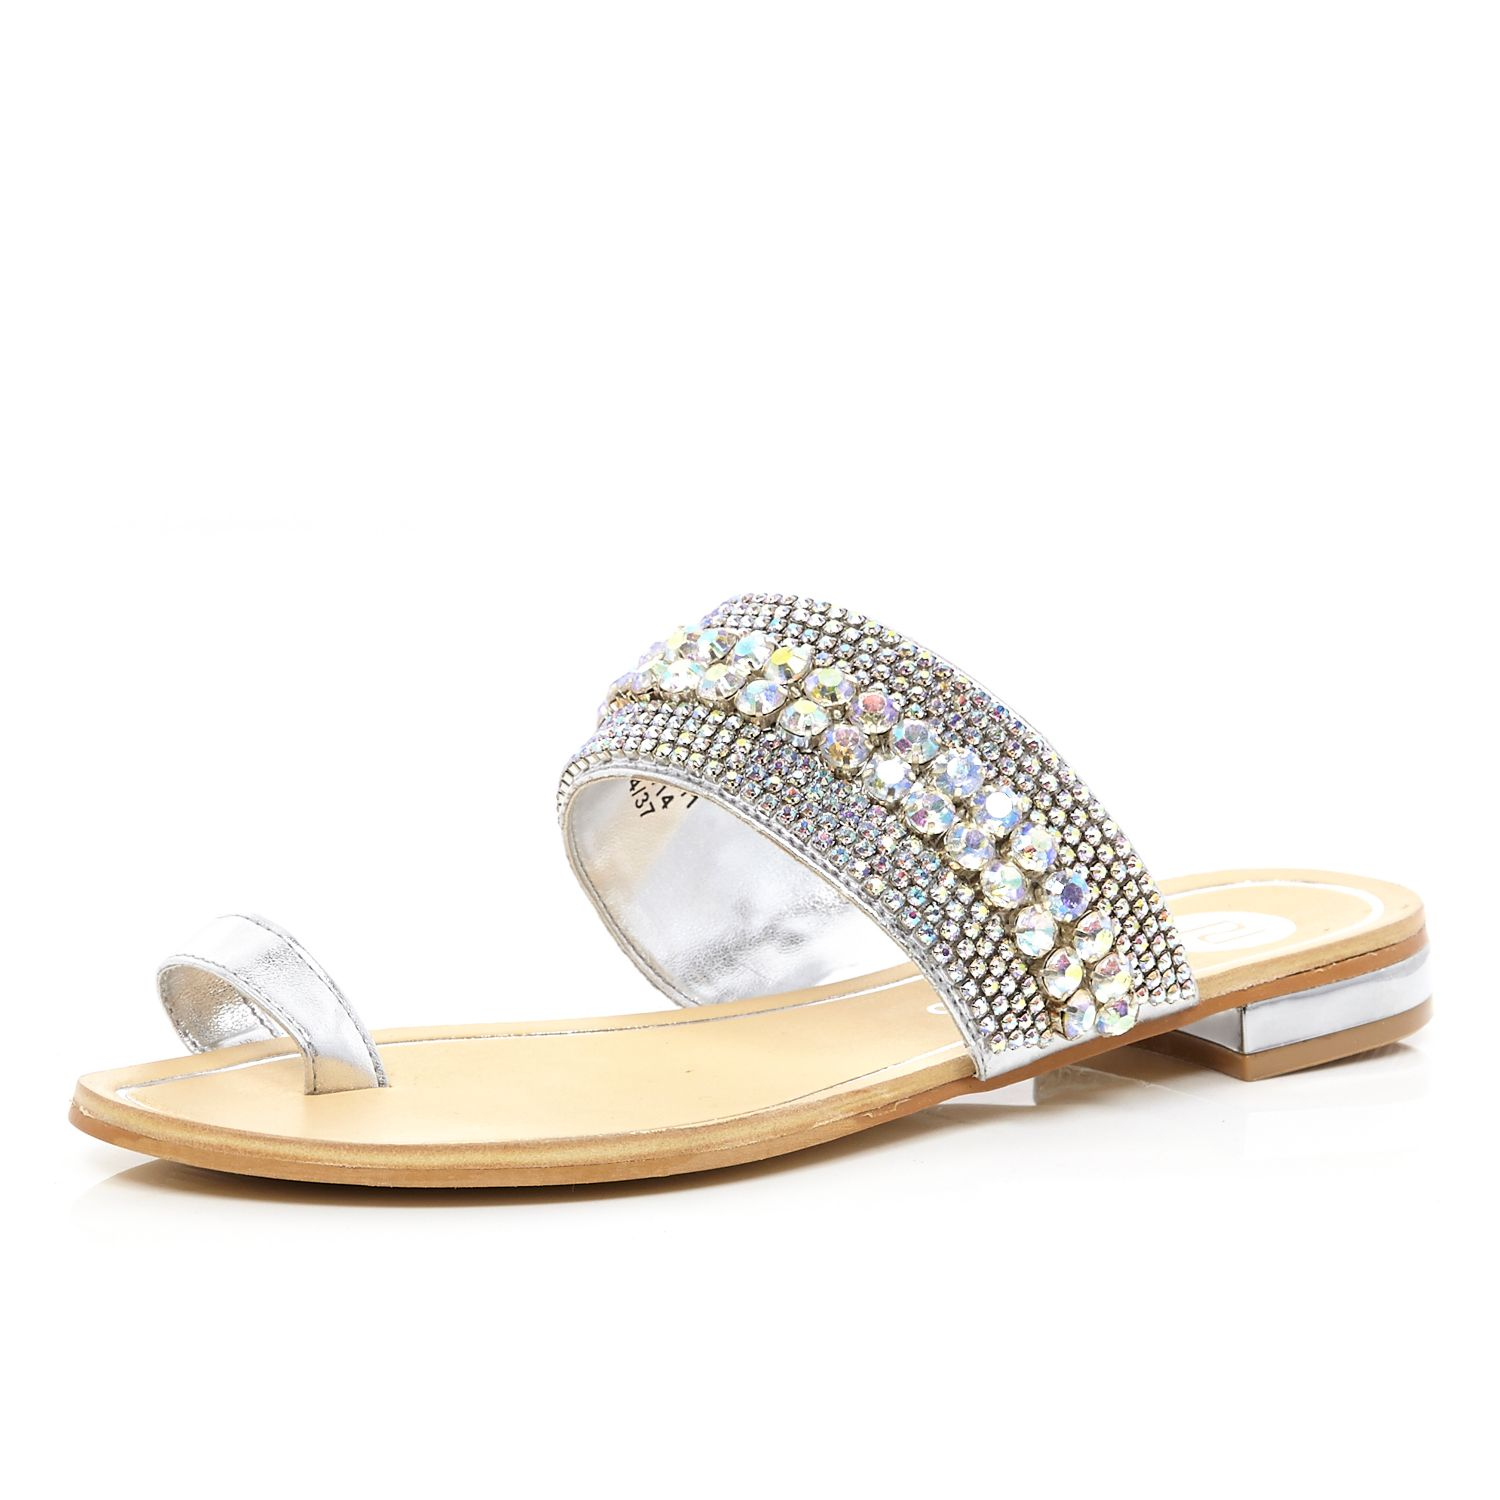 River Island Silver Embellished Toe Loop Sandals in Metallic - Lyst